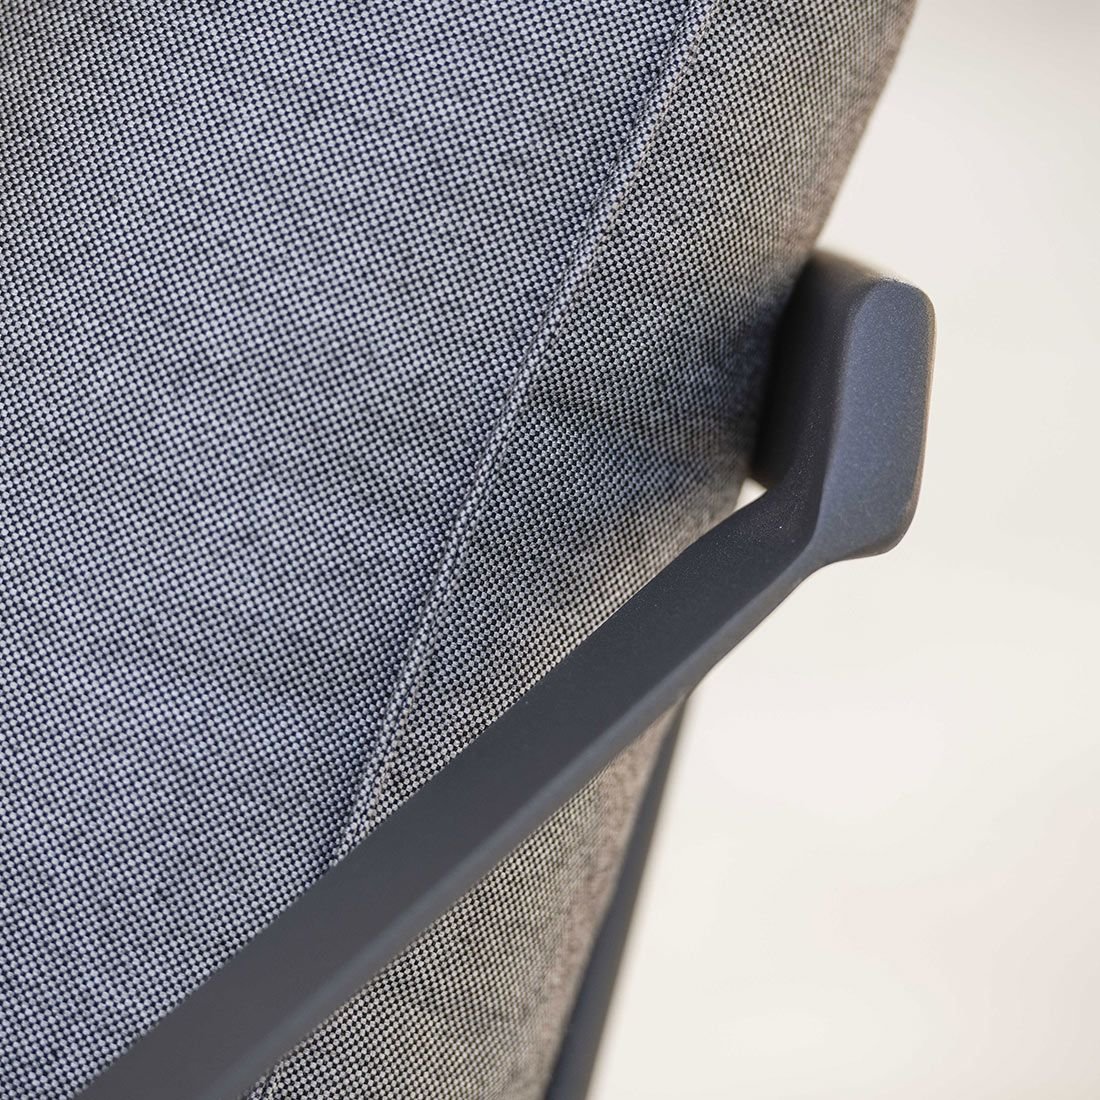 Stern Vanda 3-Sitzer Sofa Aluminium/Outdoorstoff